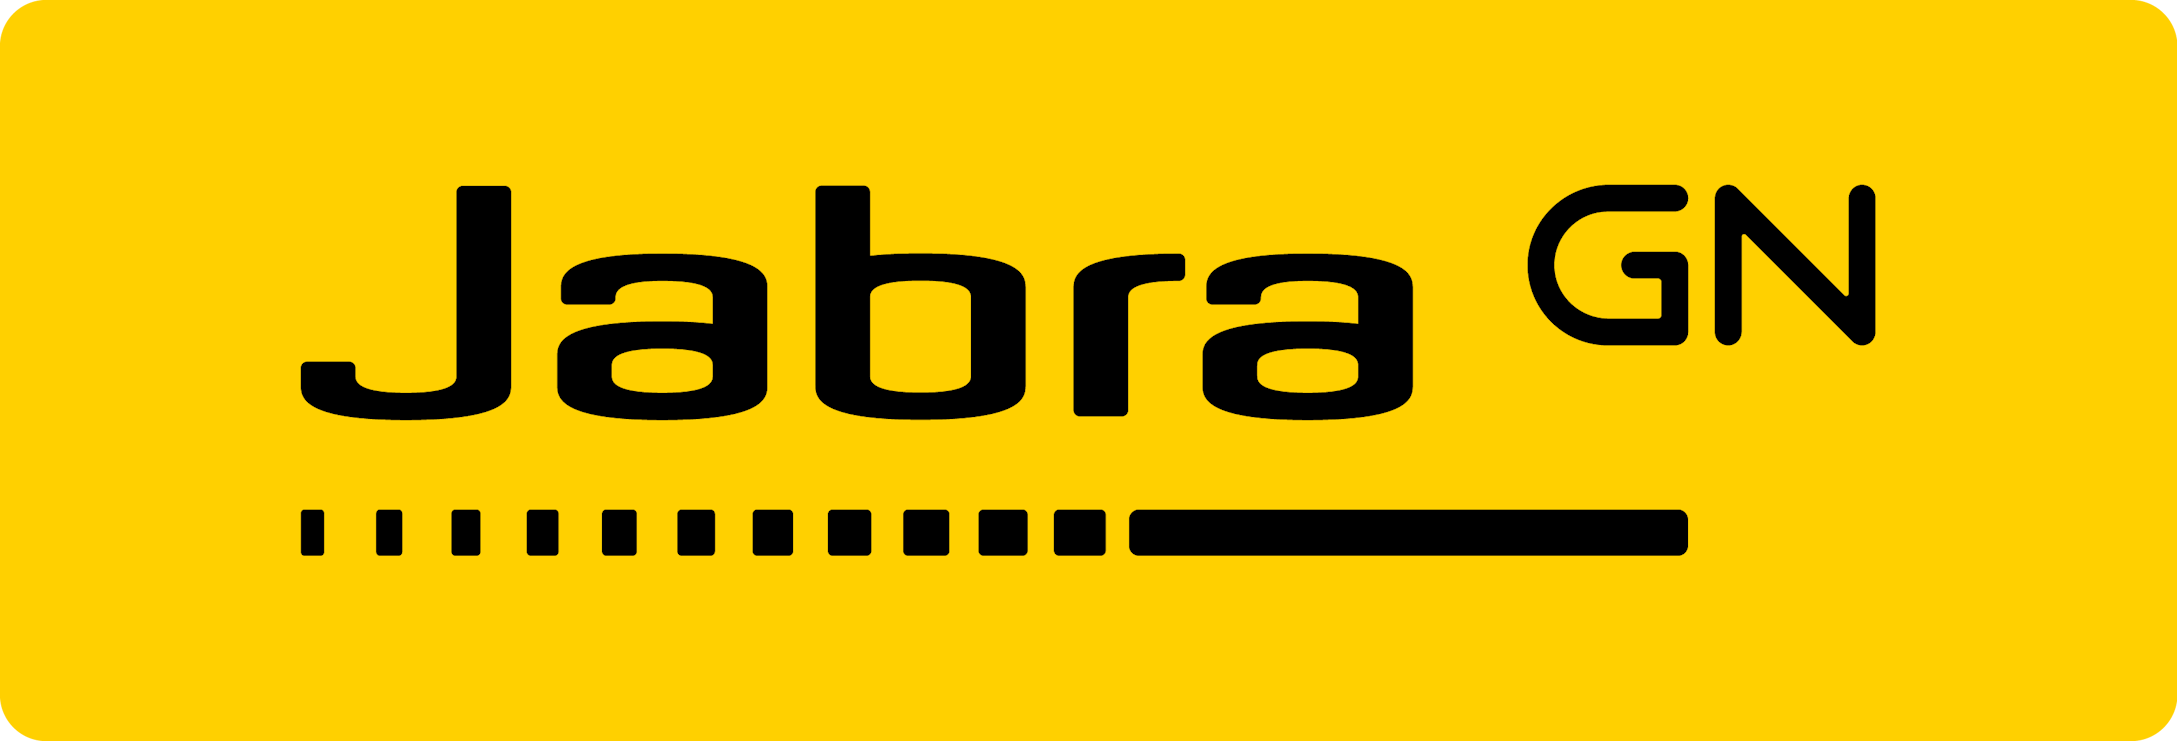 jabra.co.uk